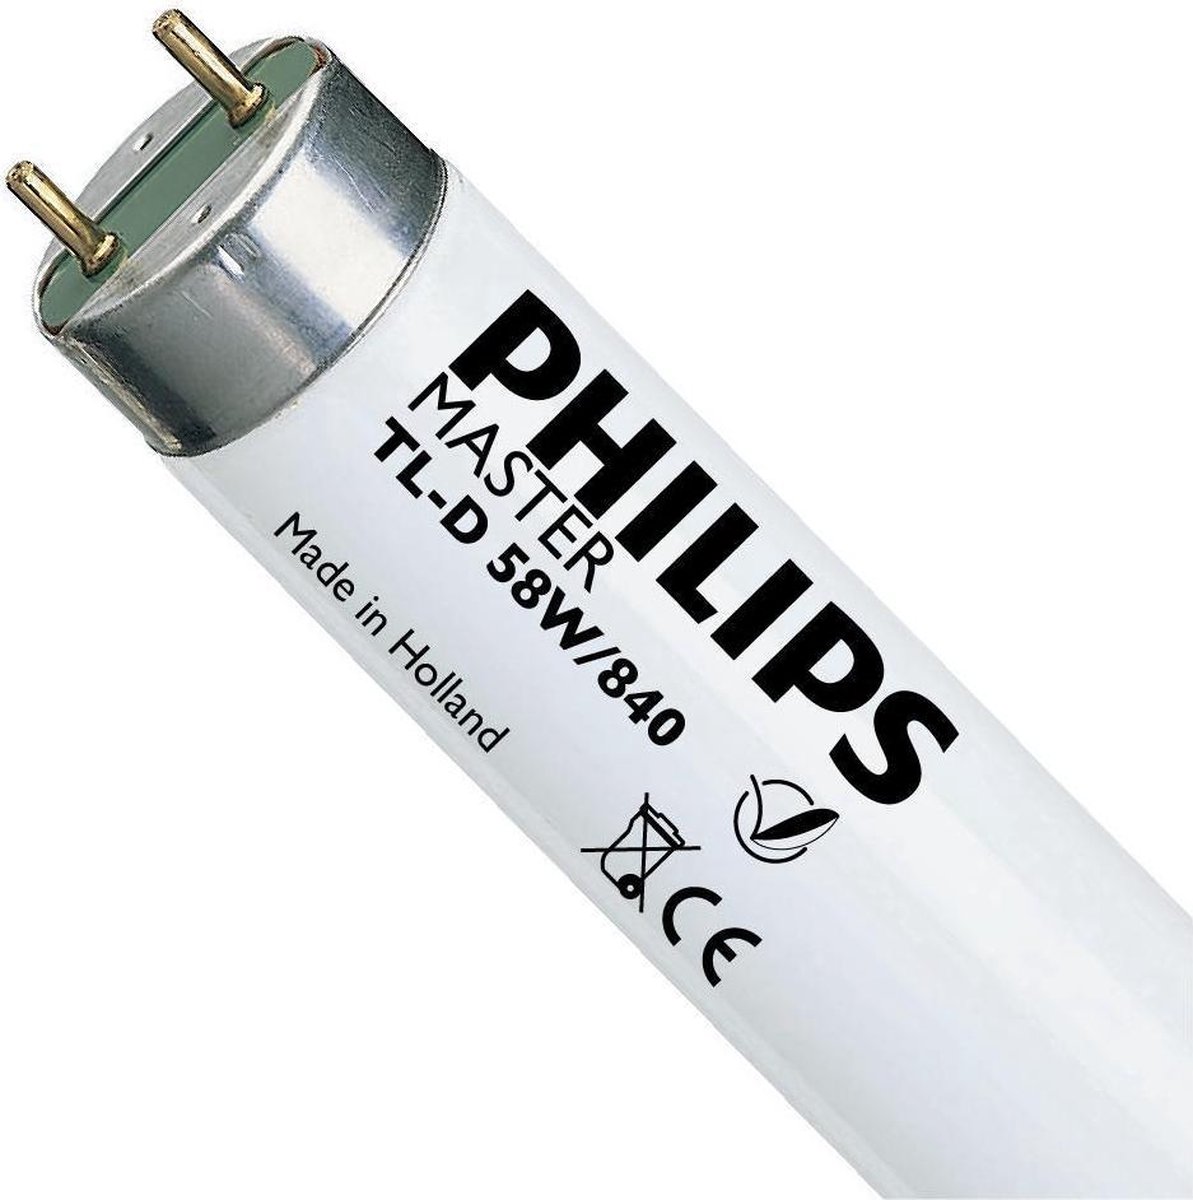 Philips Fluor lamp tl 58W 151cm kl840 (Prijs per stuk) - Philips